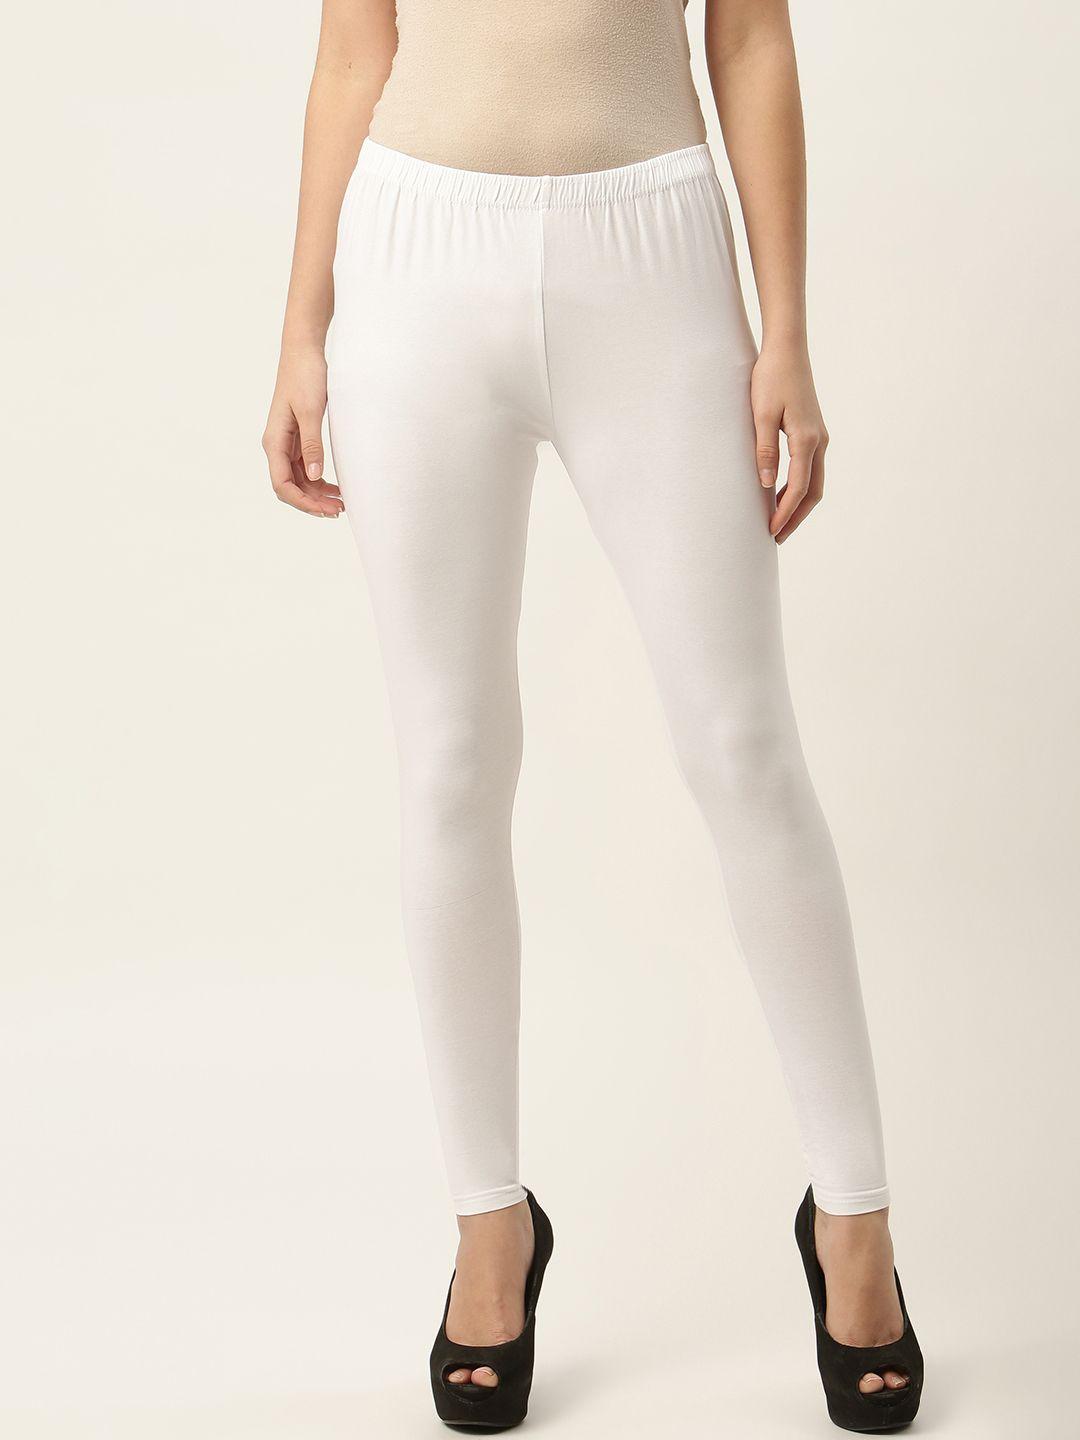 ms.lingies-women-white-solid-ankle-length-leggings